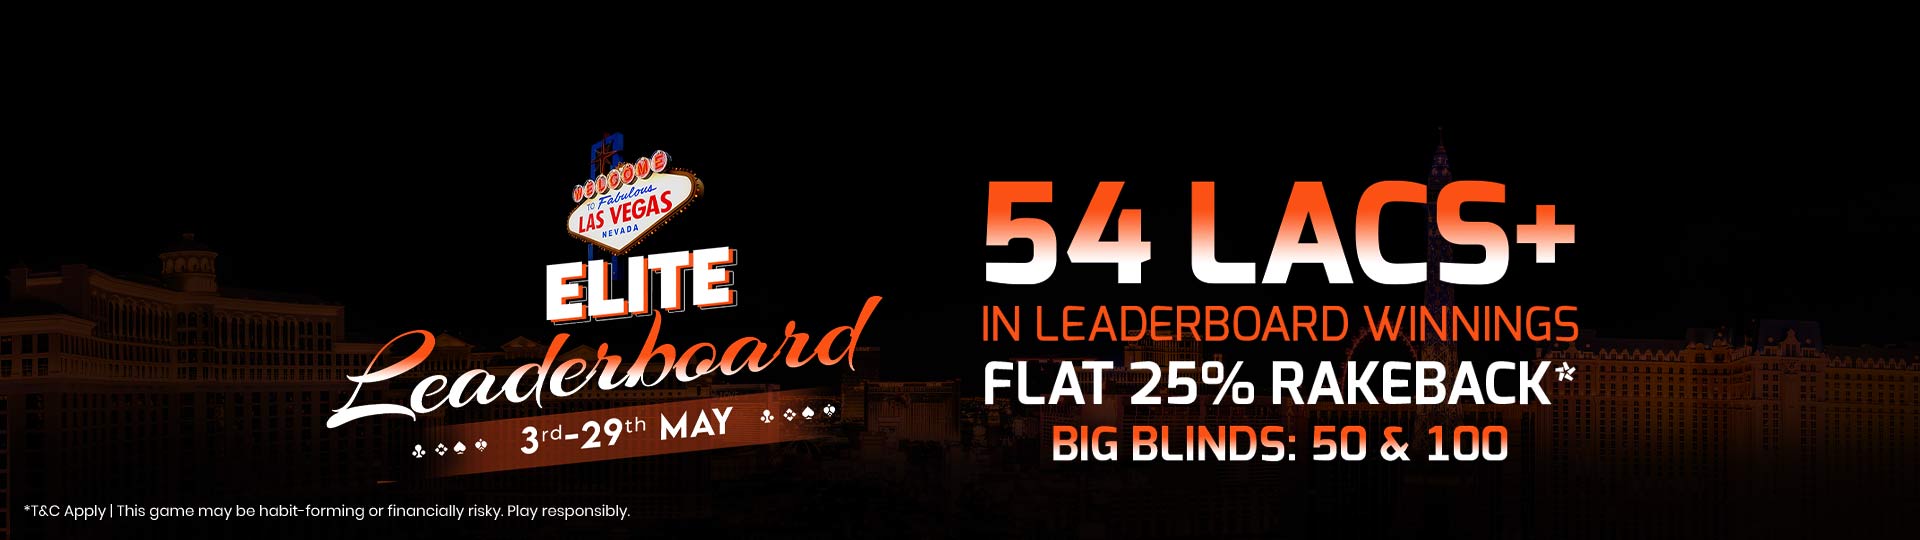 Adda52|Online|Poker|Elite Leaderboards |May